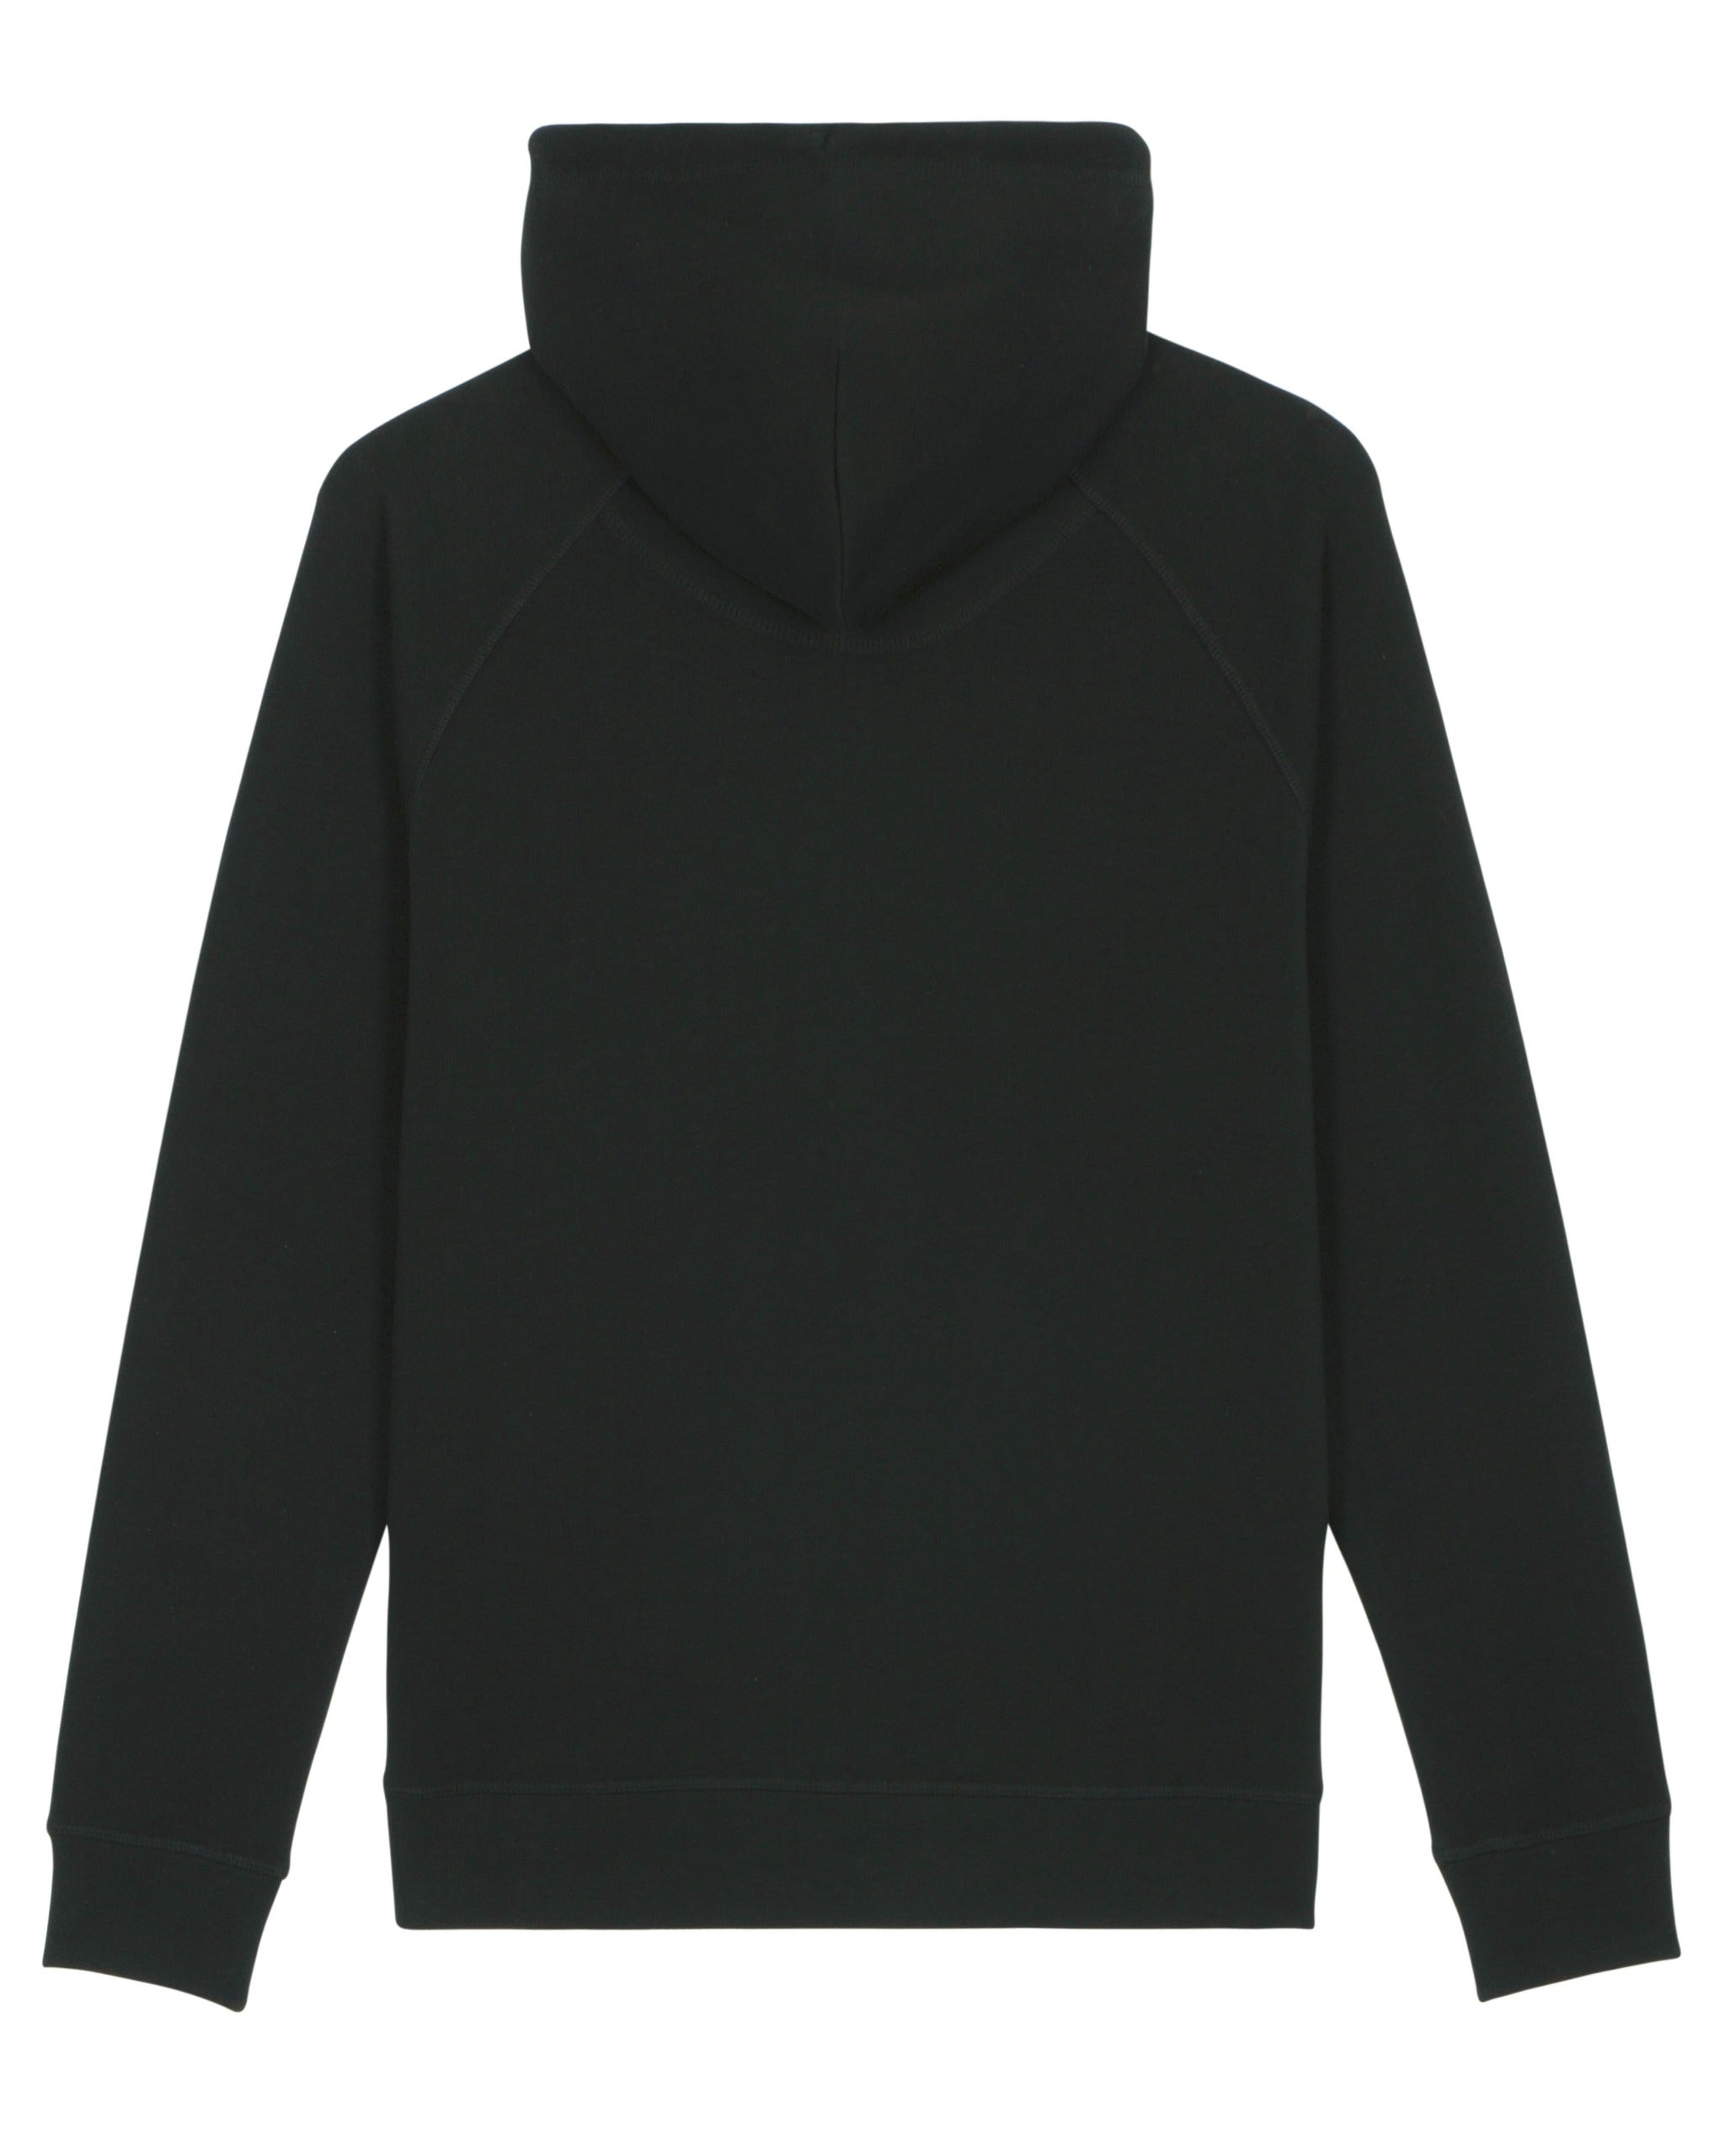 Unisex sweatshirt with side pockets "Reverie"